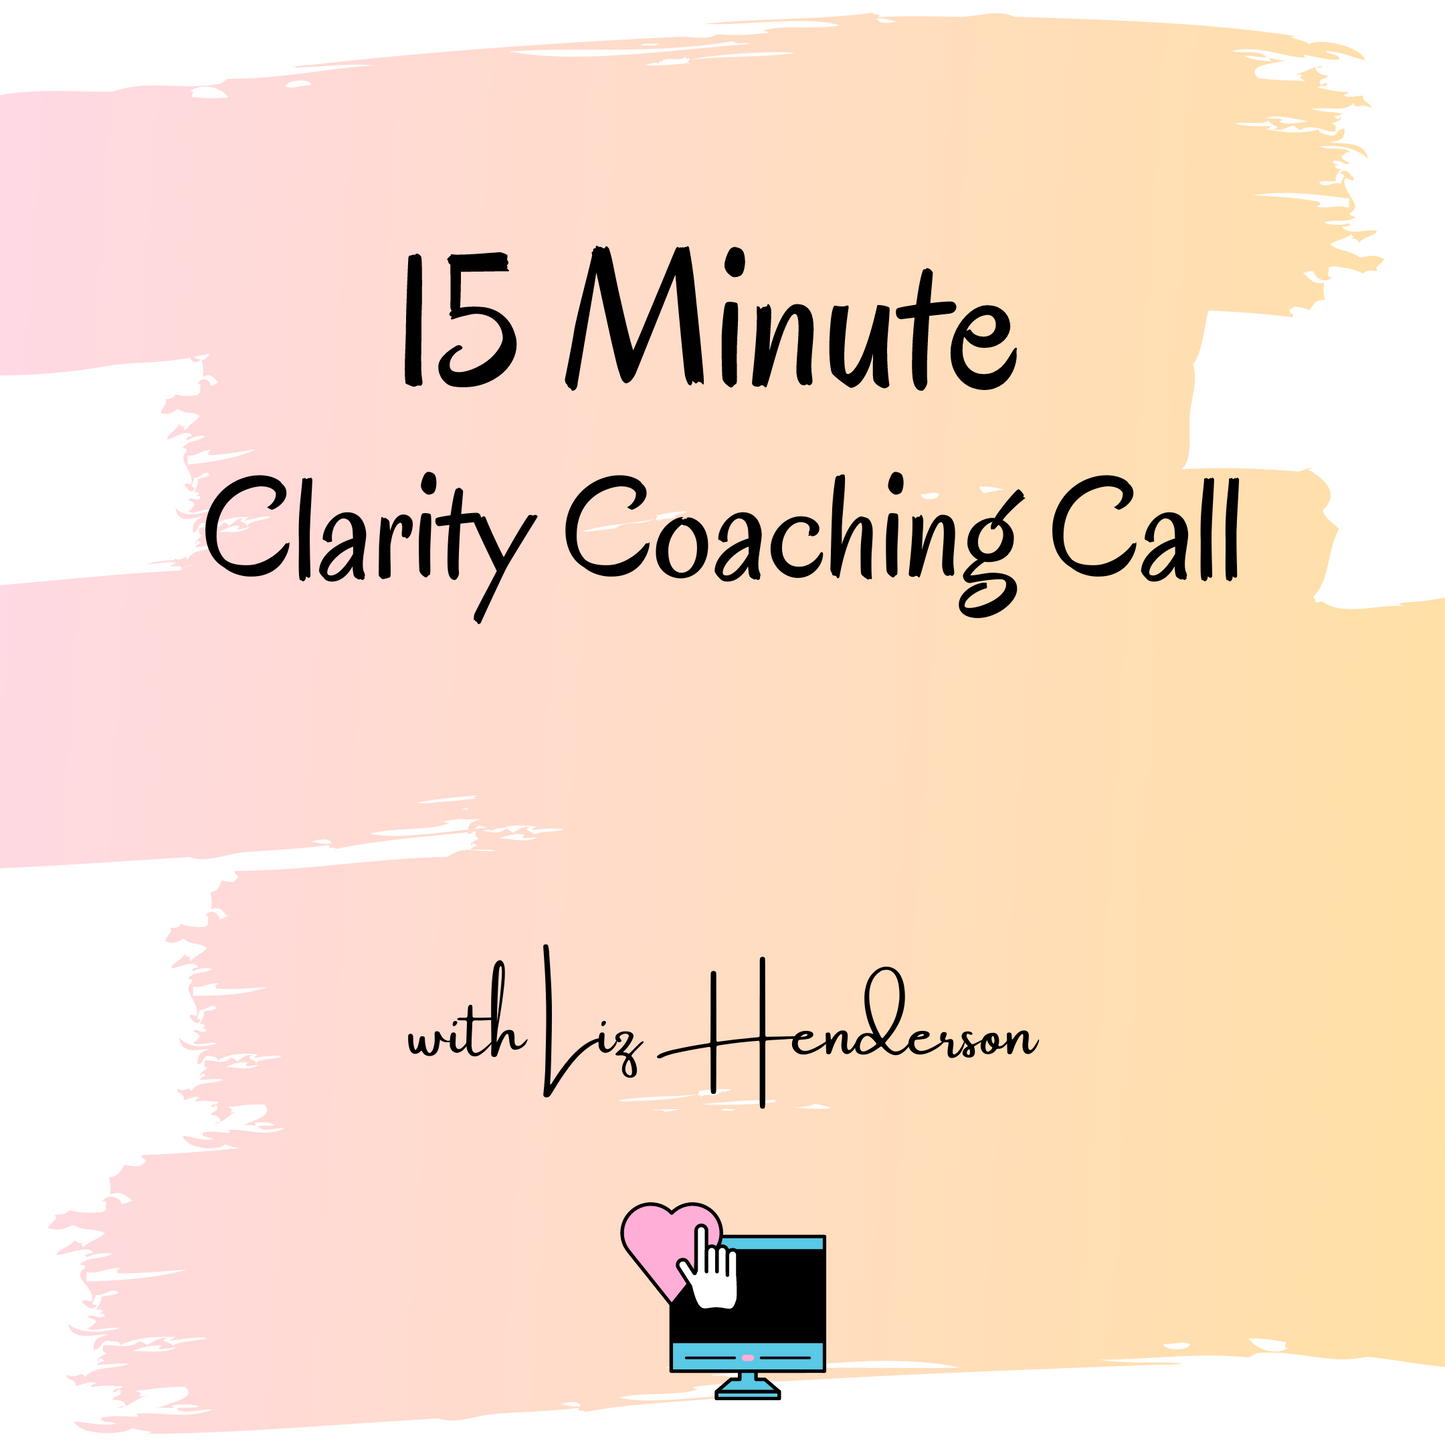 15 Minute Clarity Coaching Call